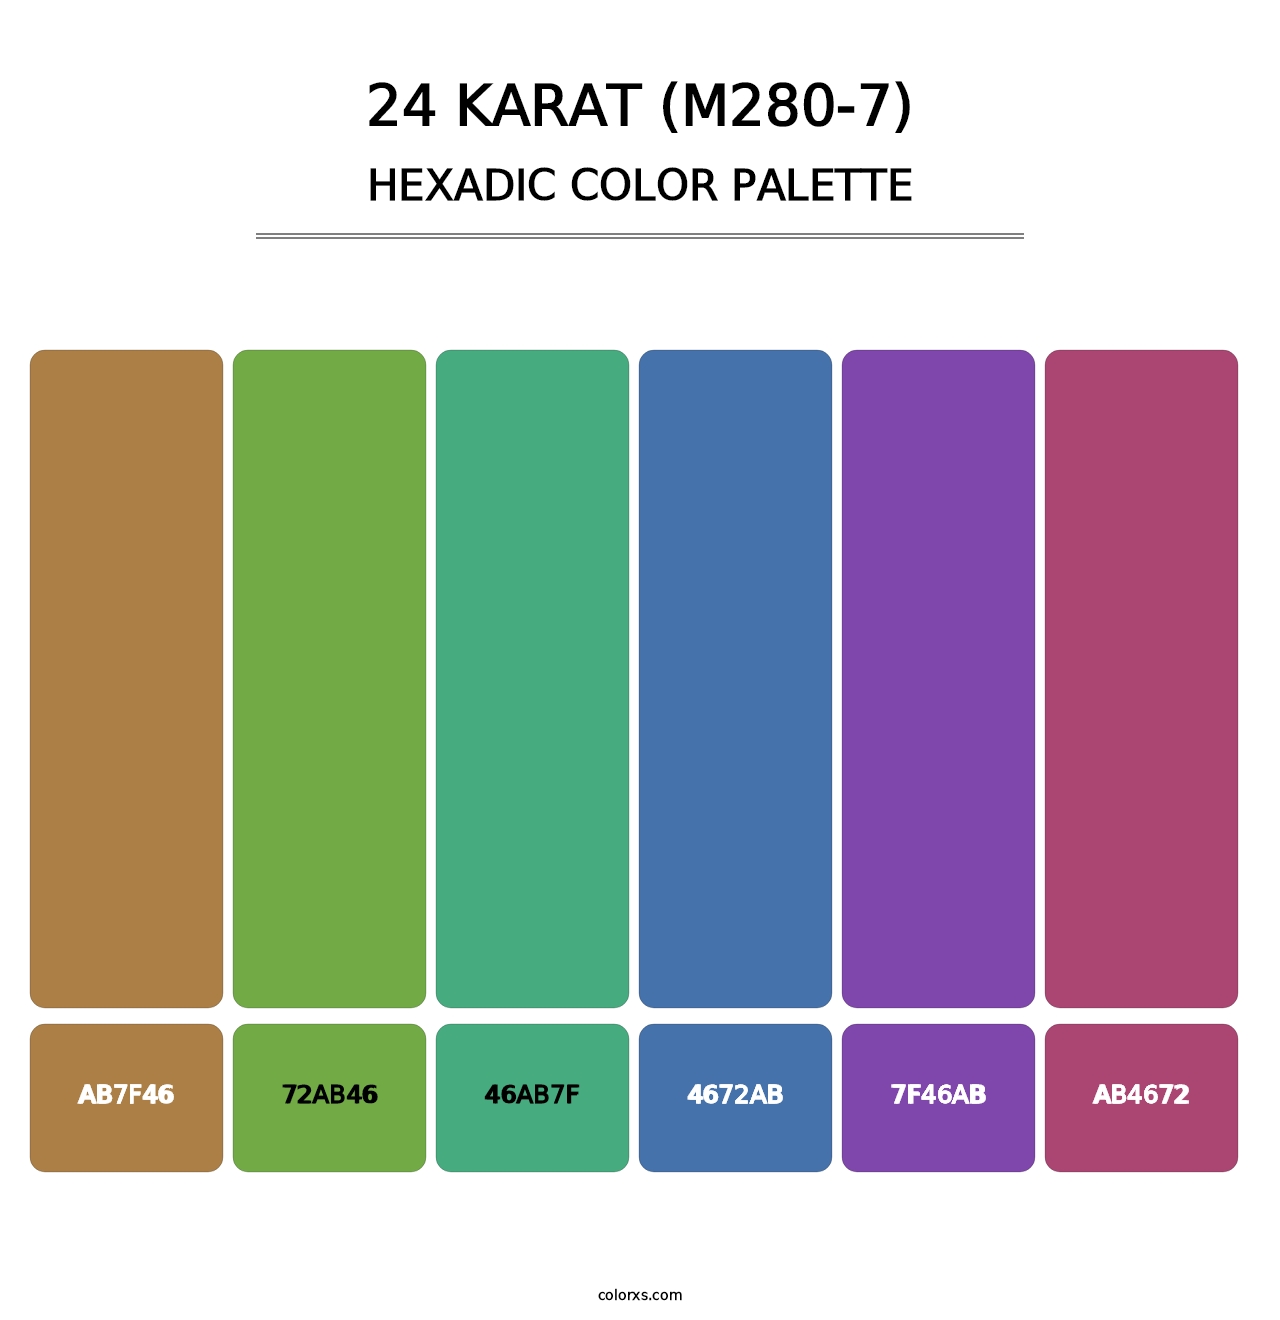 24 Karat (M280-7) - Hexadic Color Palette